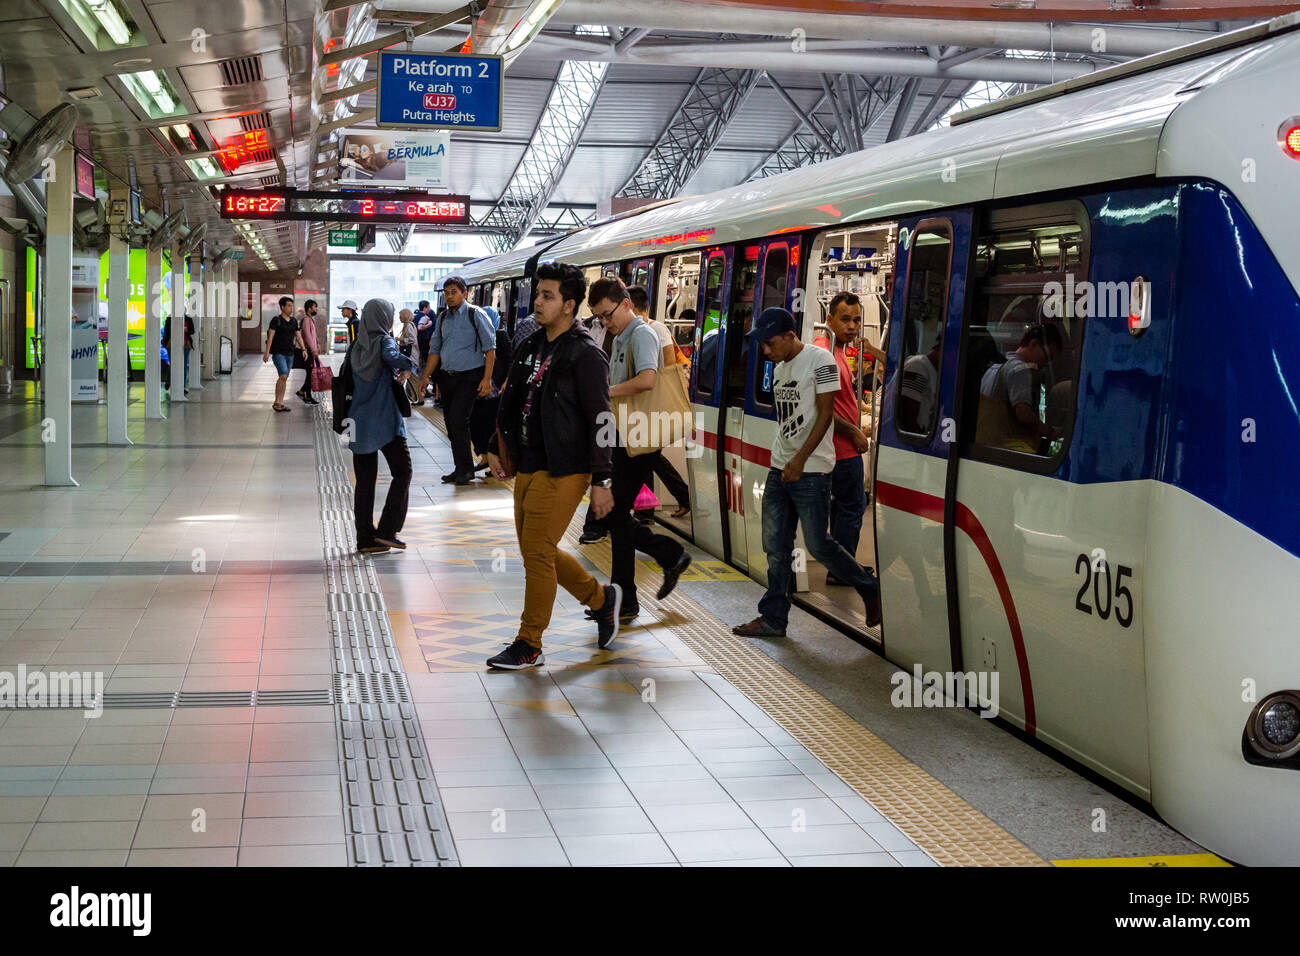 Passagiere verlassen LRT (Light RailTransit) Zug am KL Sentral Station, Kuala Lumpur, Malaysia. Stockfoto